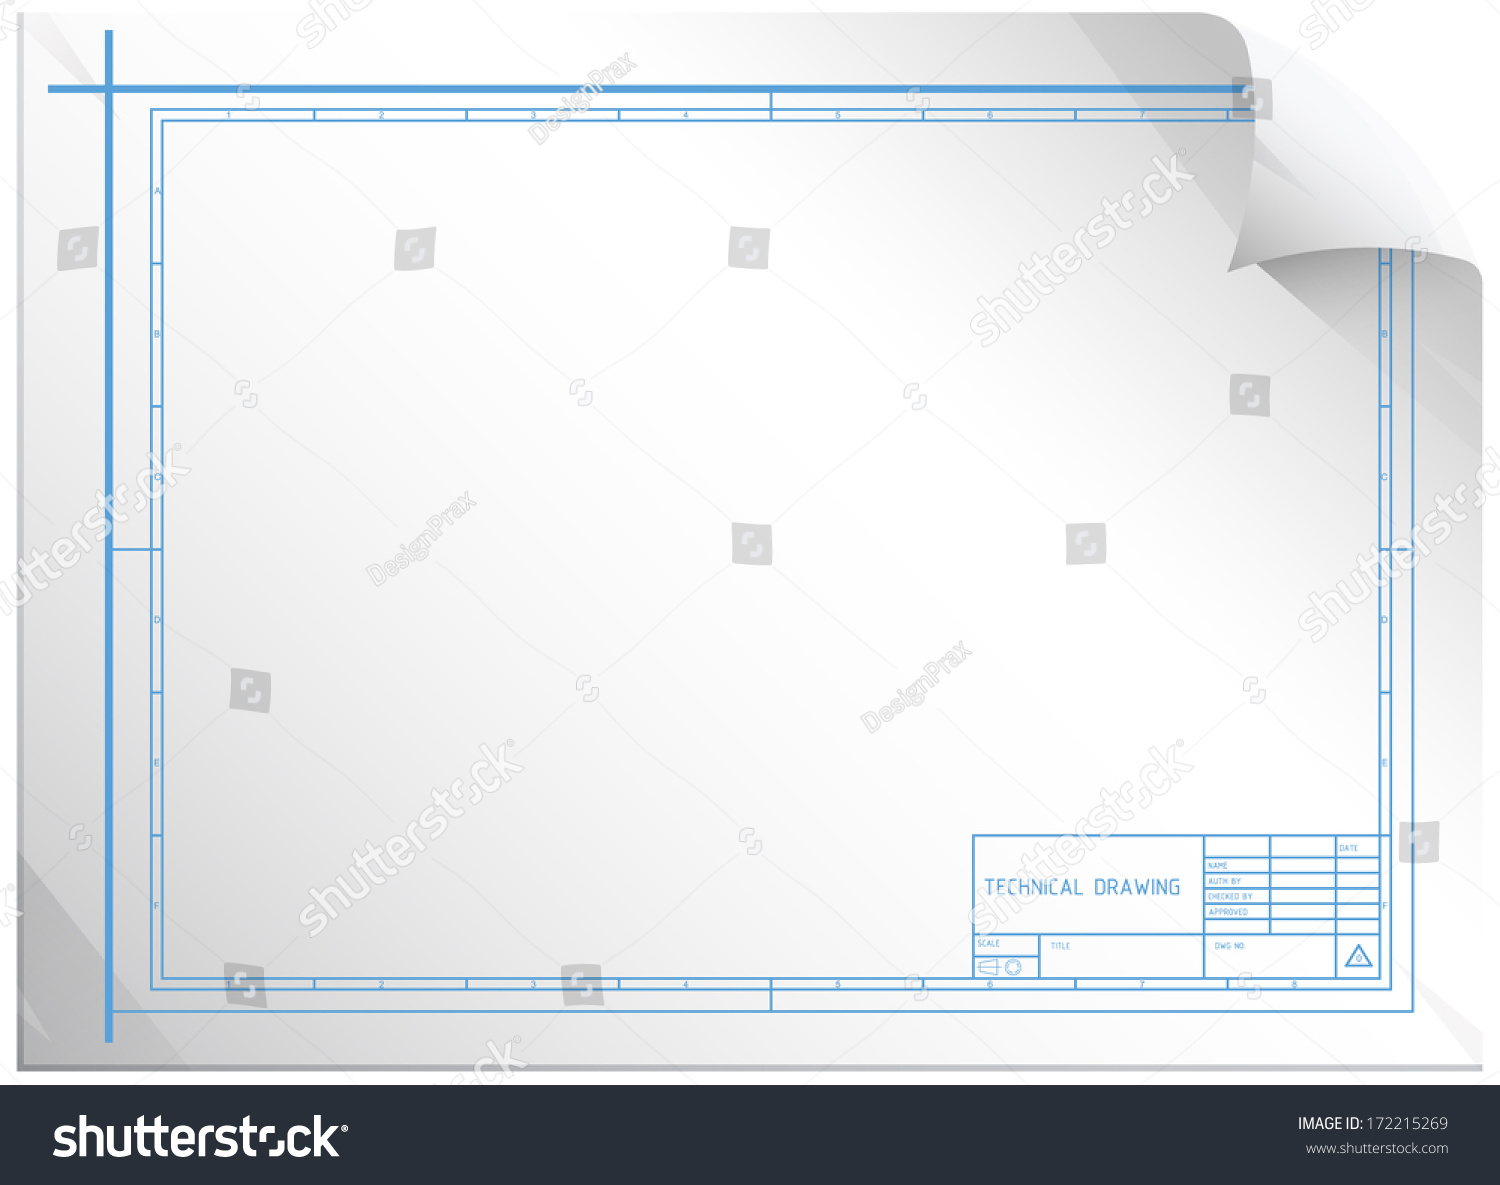 Blank Engineering Drawing Sheet Stock Vector Illustration 172215269